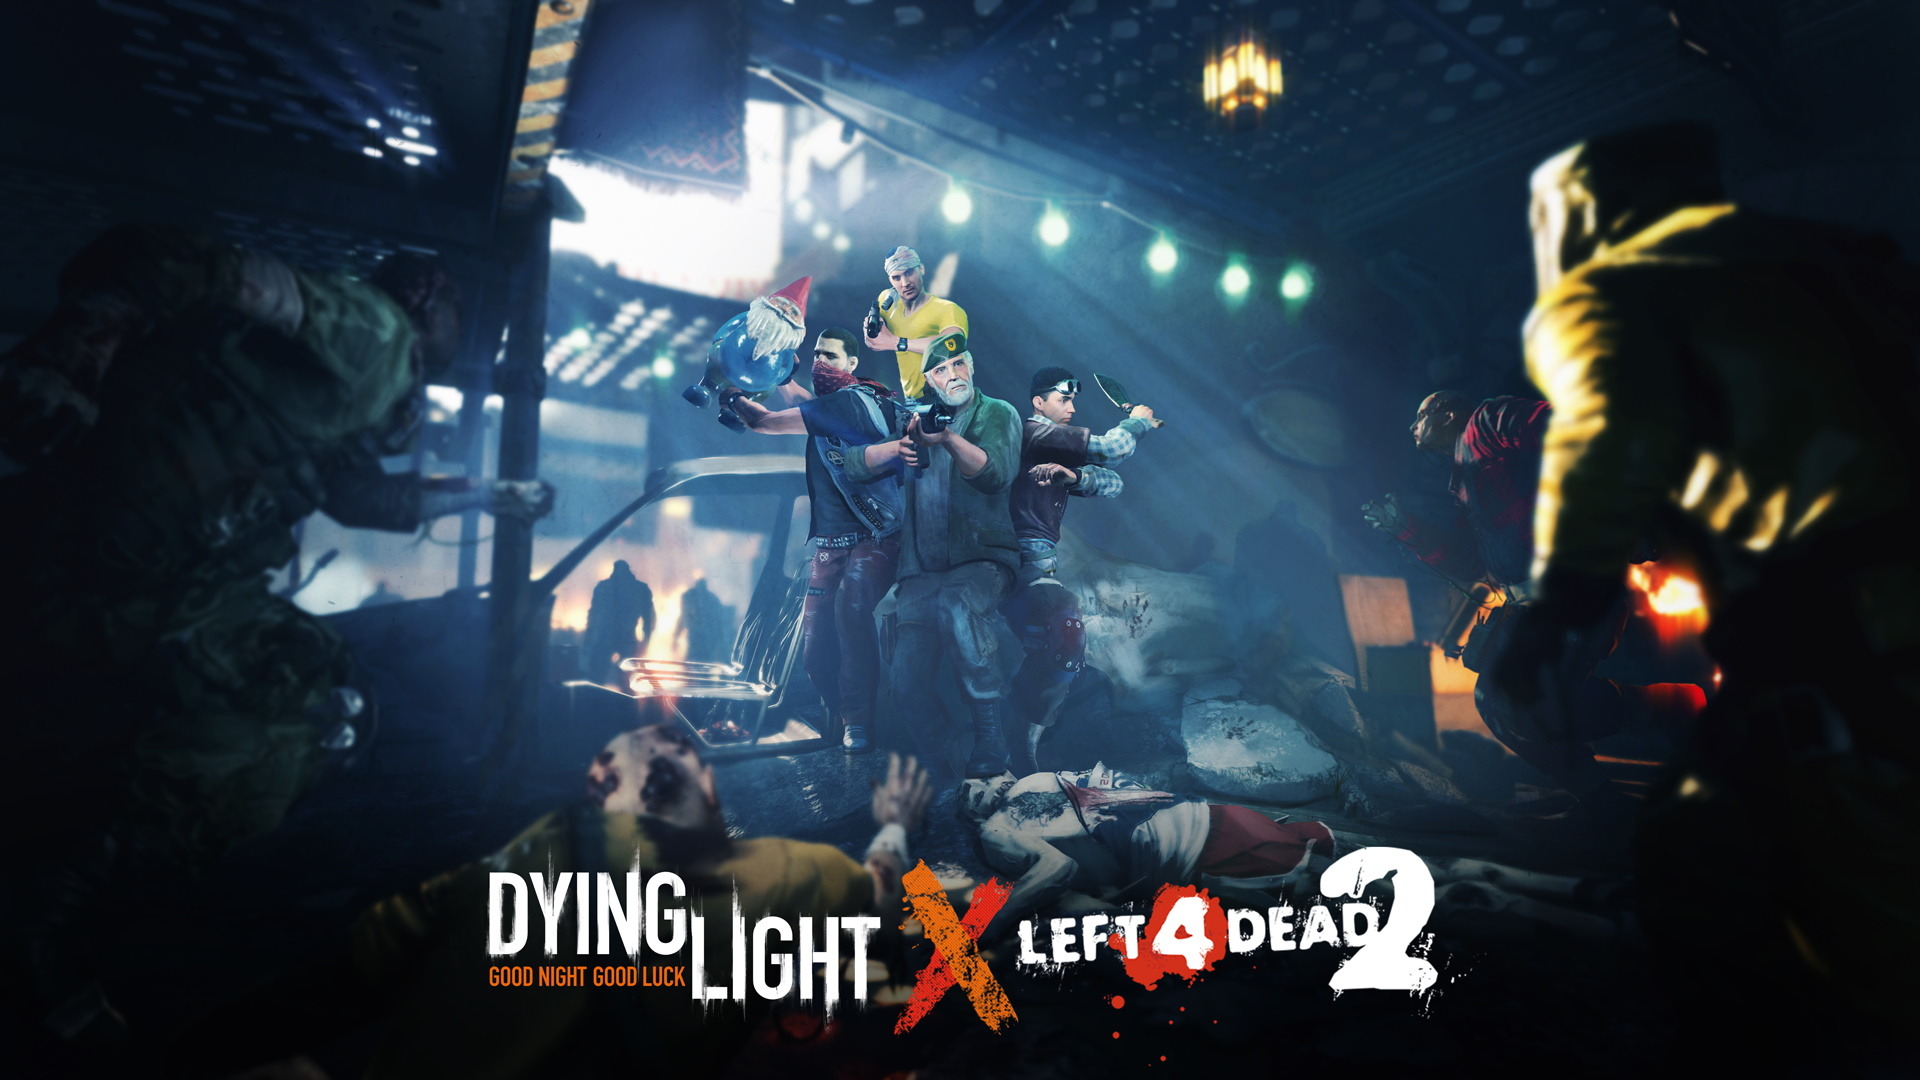 Dying Light Left 4 Dead 2 コラボイベが今年も開催 ビル と ノーム チョンプスキー が登場する無料dlcも配信中 Game Spark 国内 海外ゲーム情報サイト